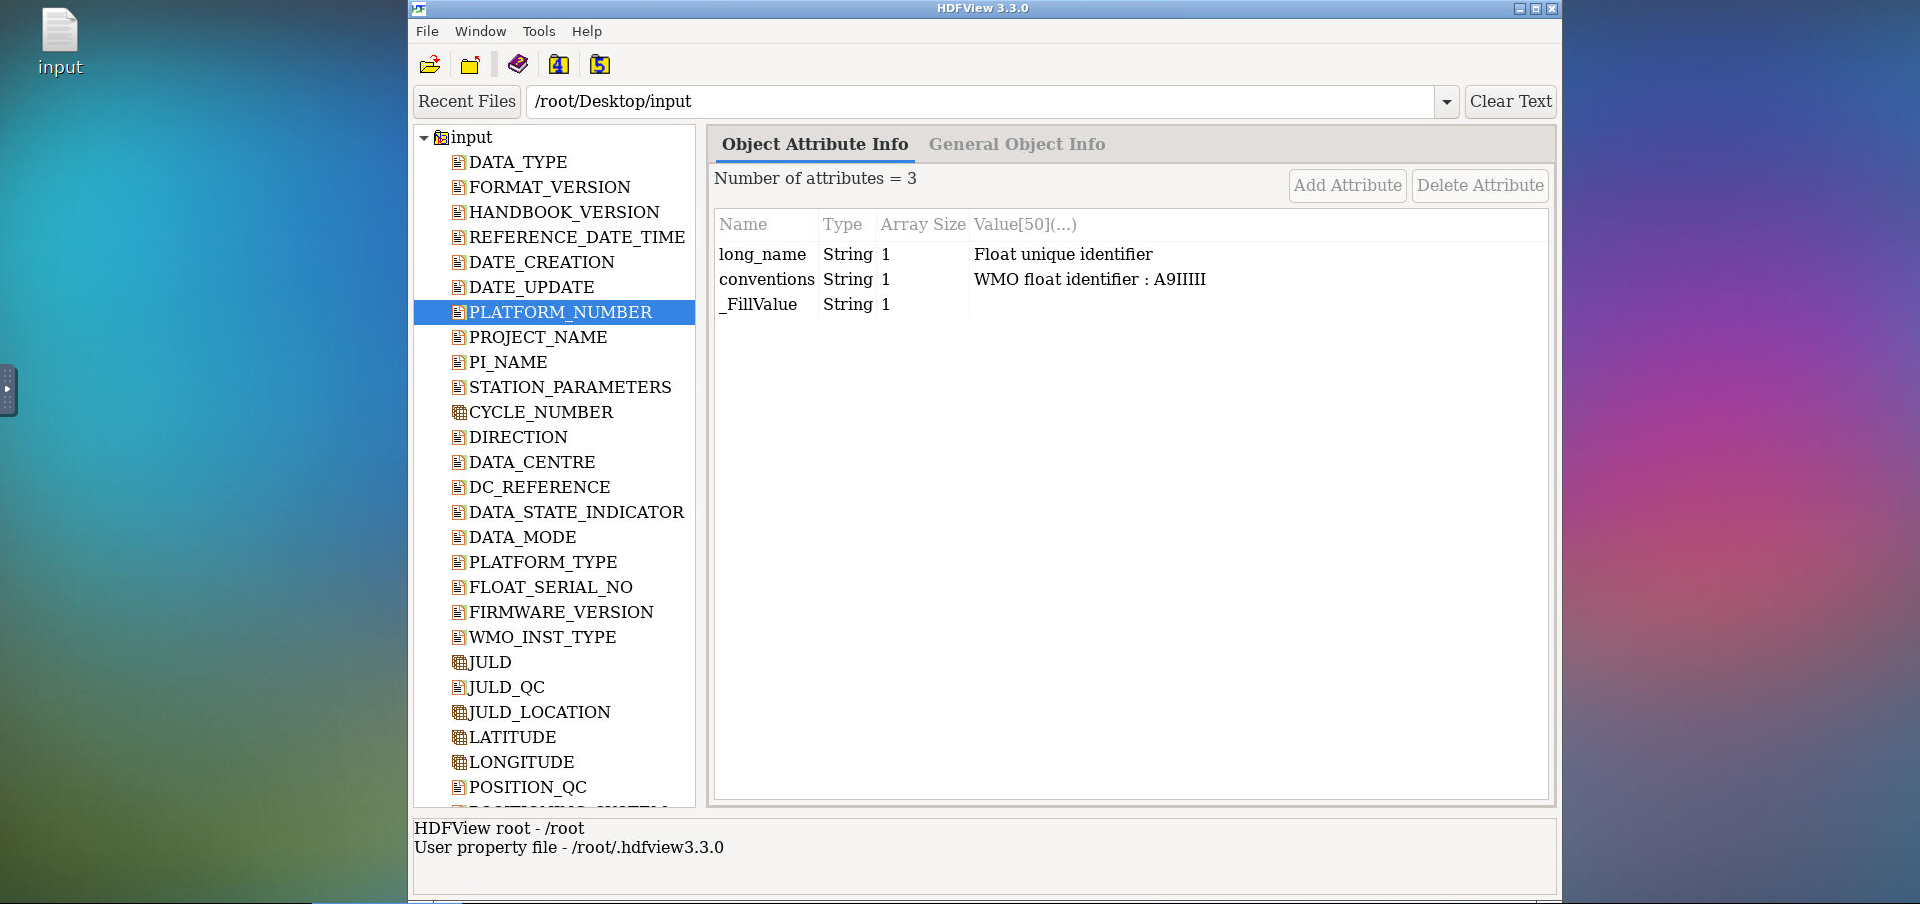 Screenshot of HDFView running in a Virtual Desktop Environment